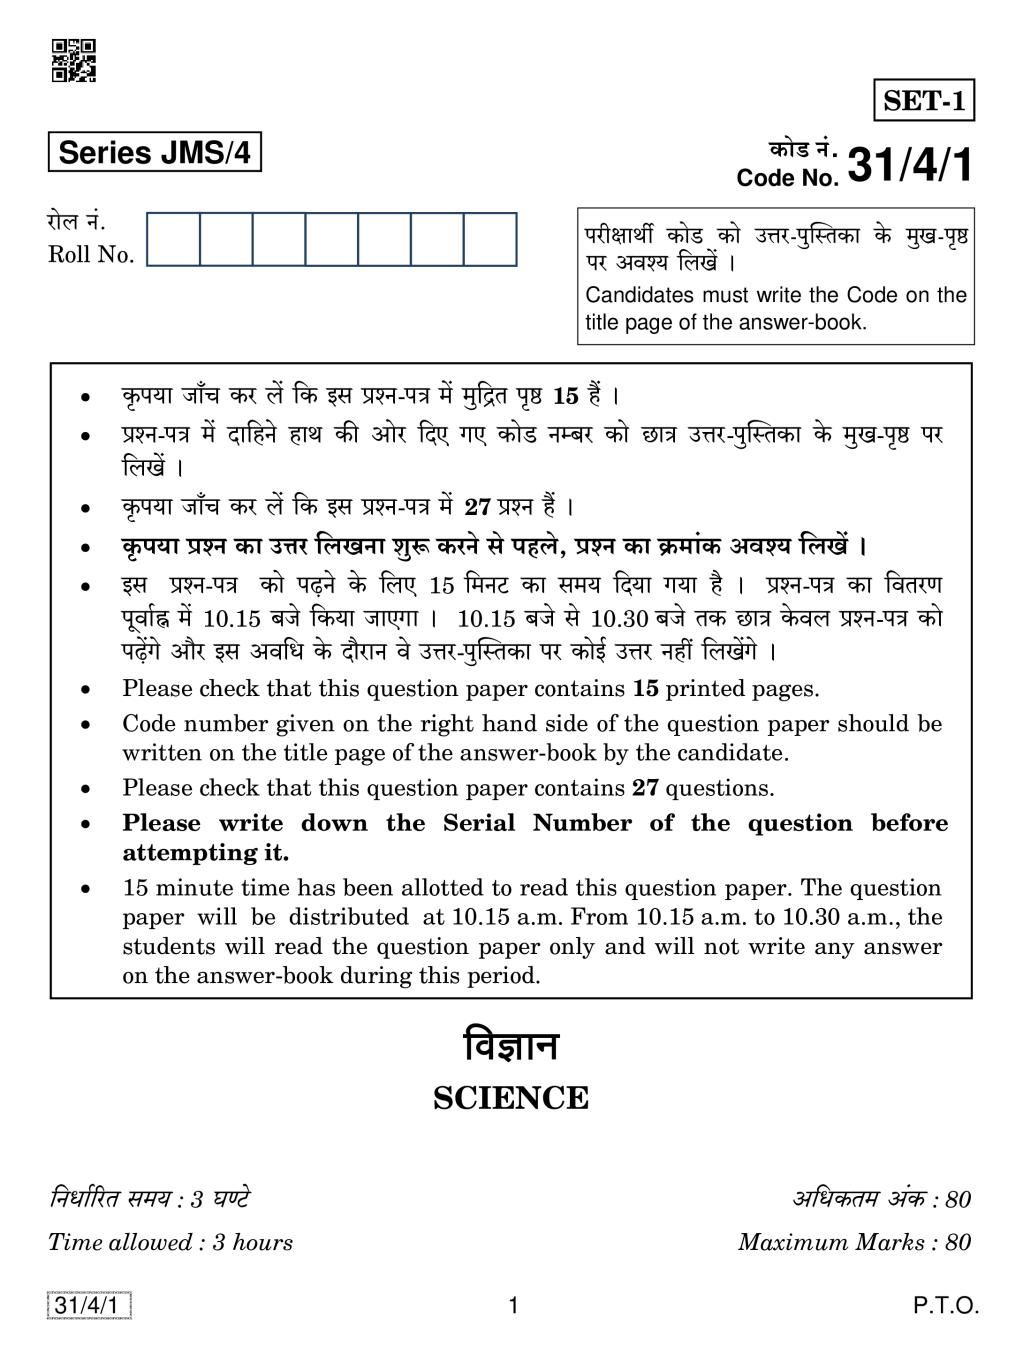 CBSE Class 10 Science Question Paper 2019 Set 4